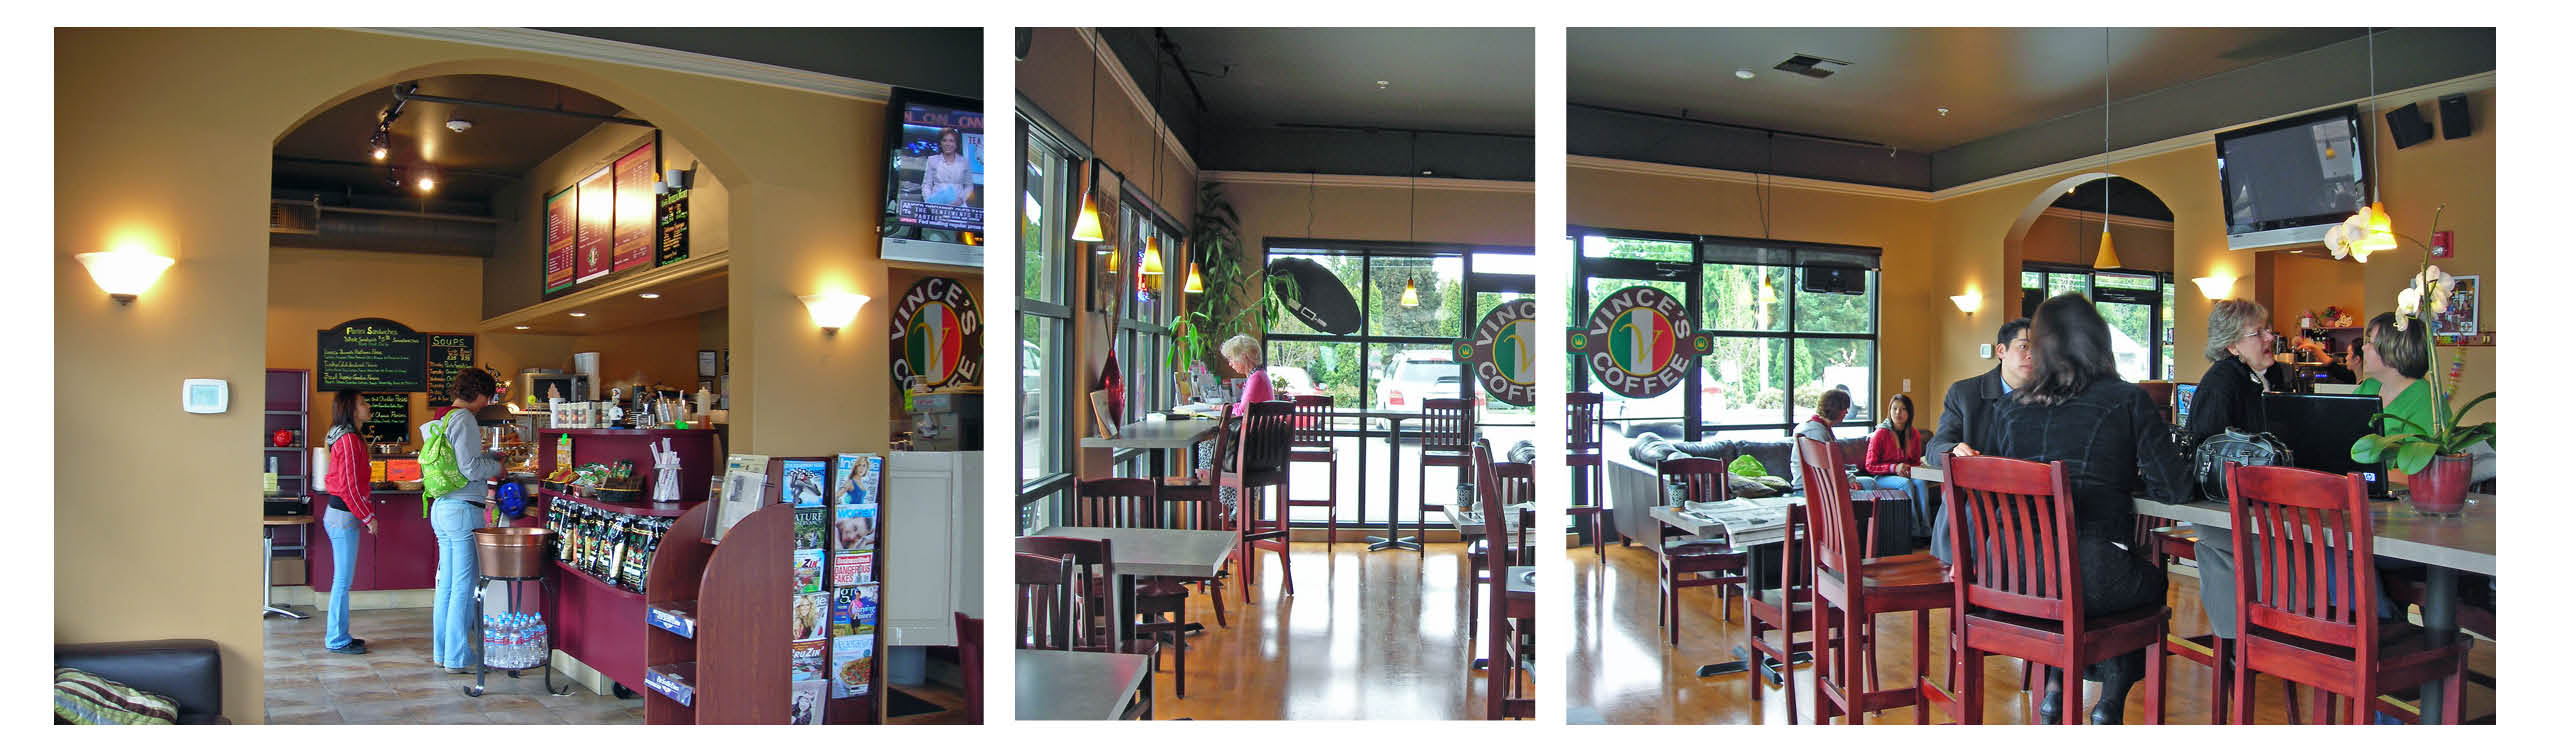 Interior images of Vince's Coffee, Olympia Avenue NE, Renton